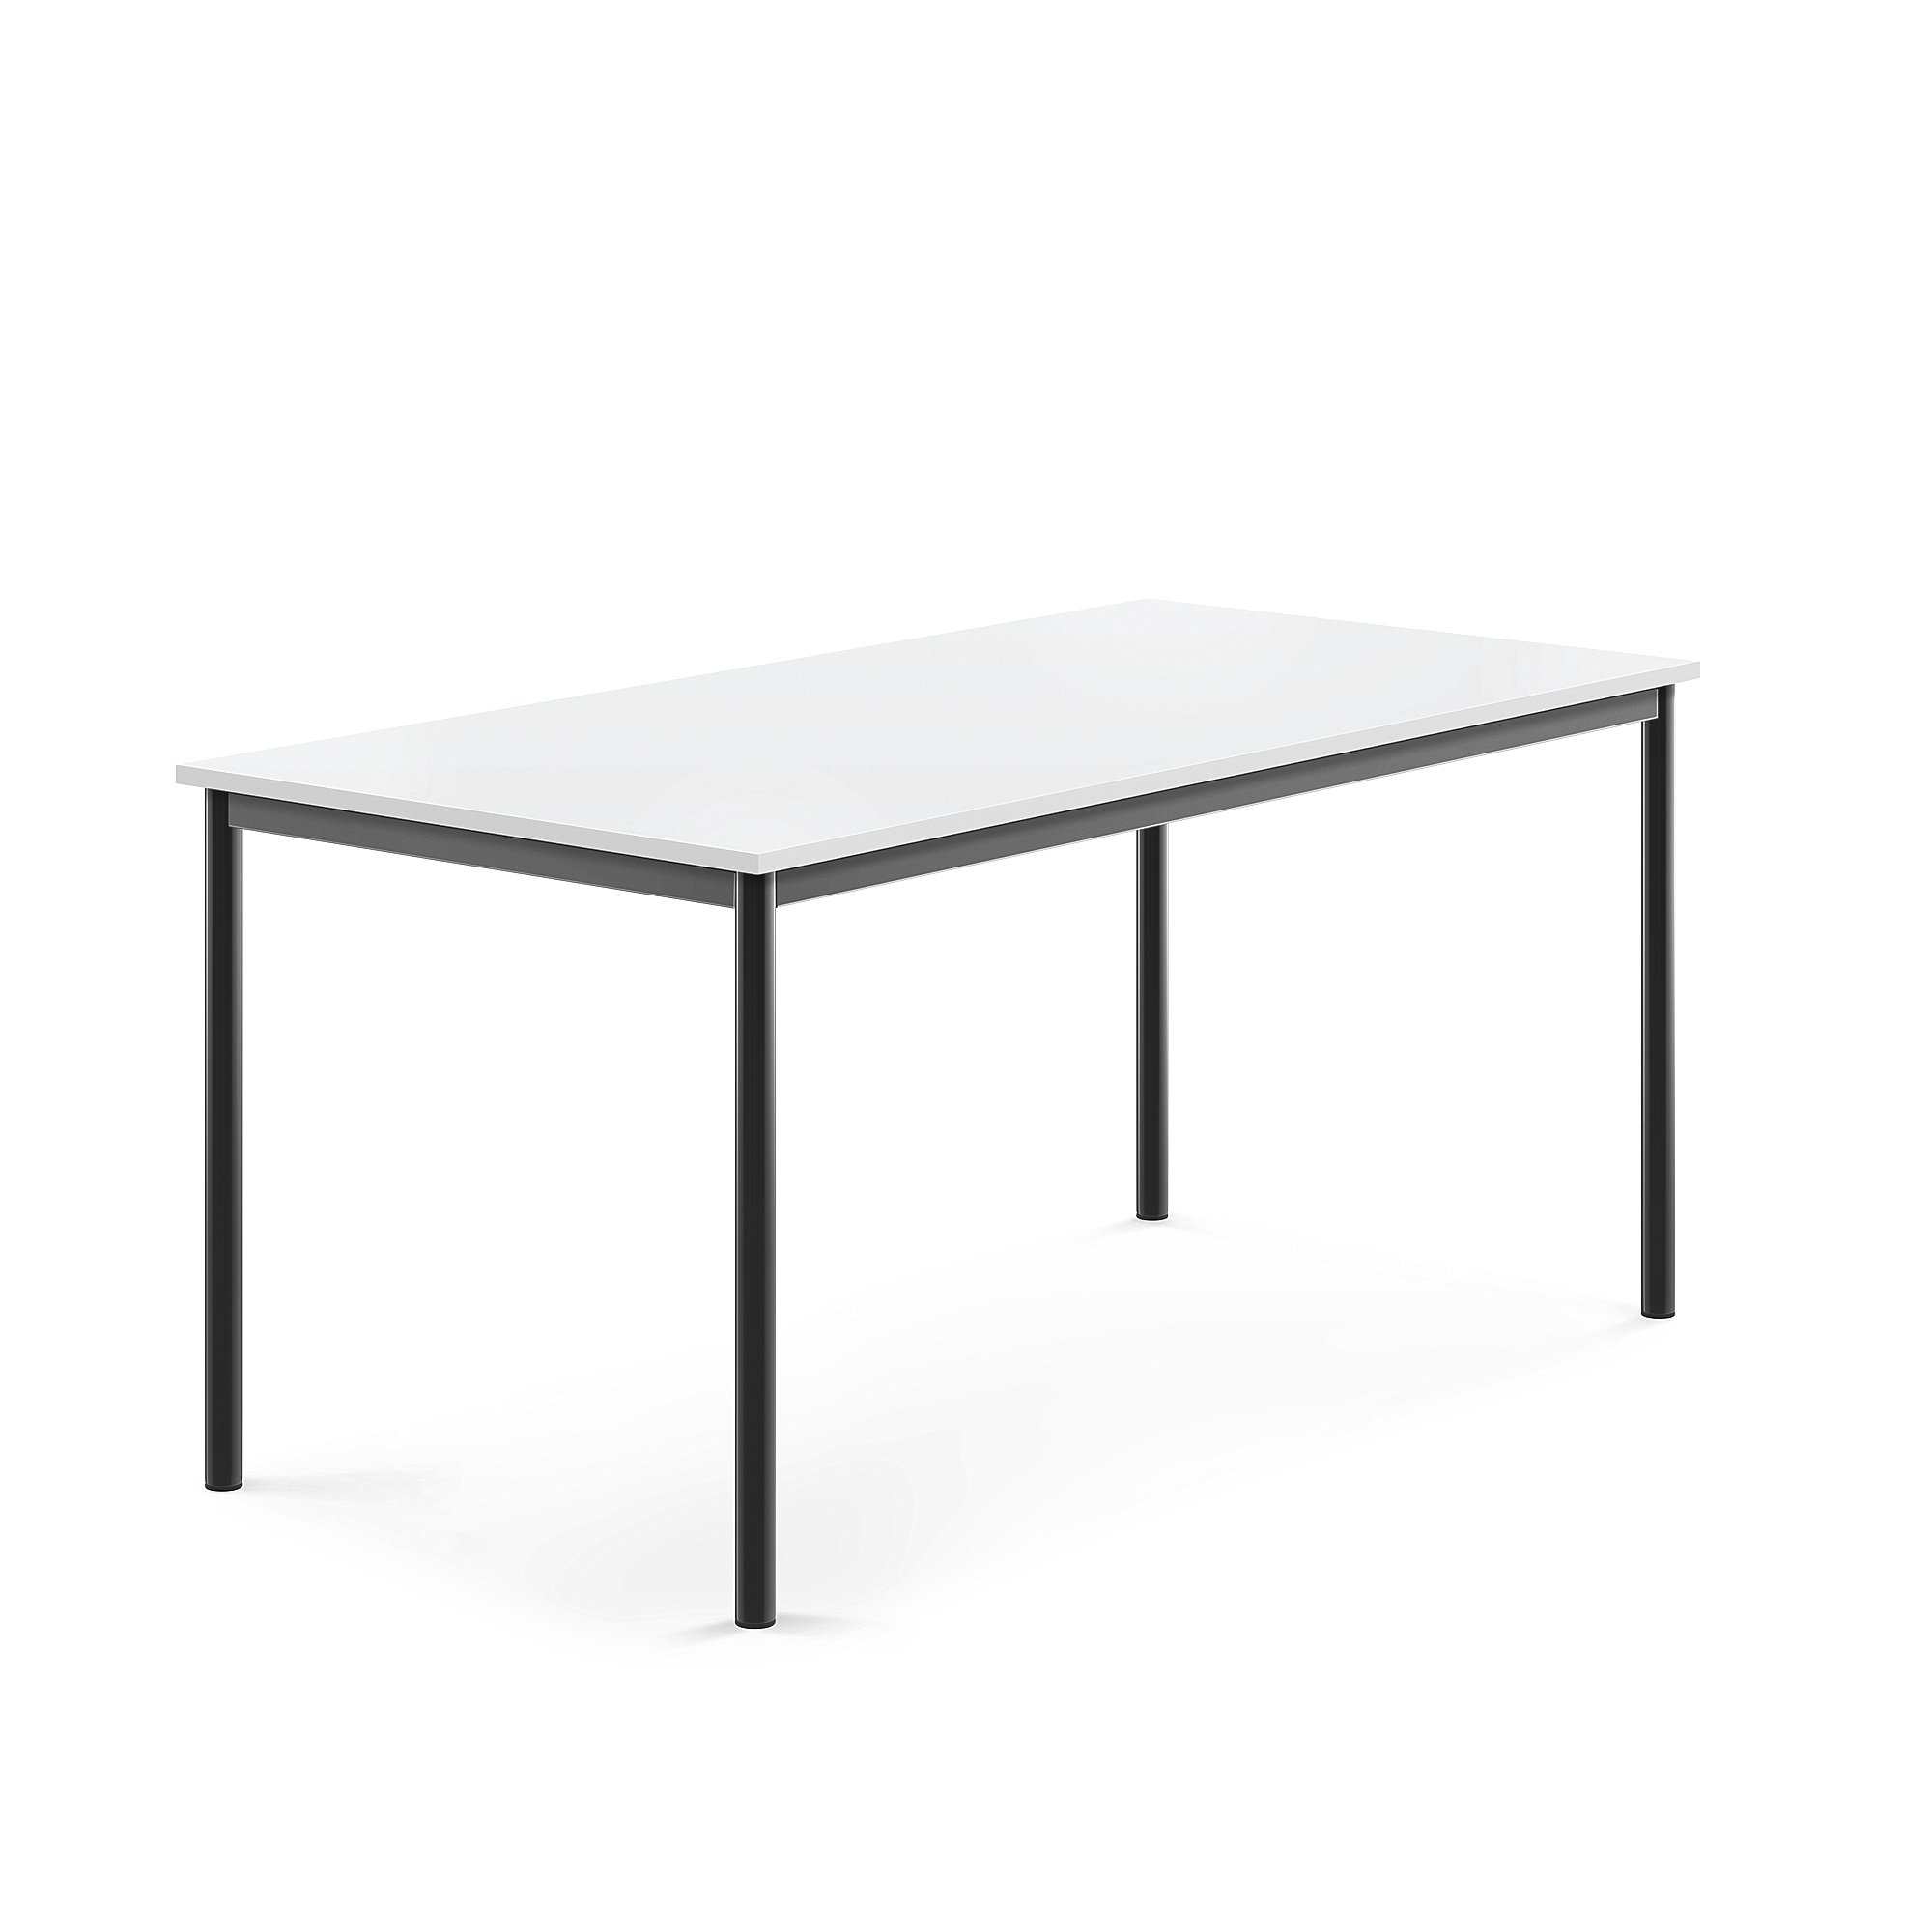 Stůl BORÅS, 1600x800x720 mm, antracitově šedé nohy, HPL deska, bílá